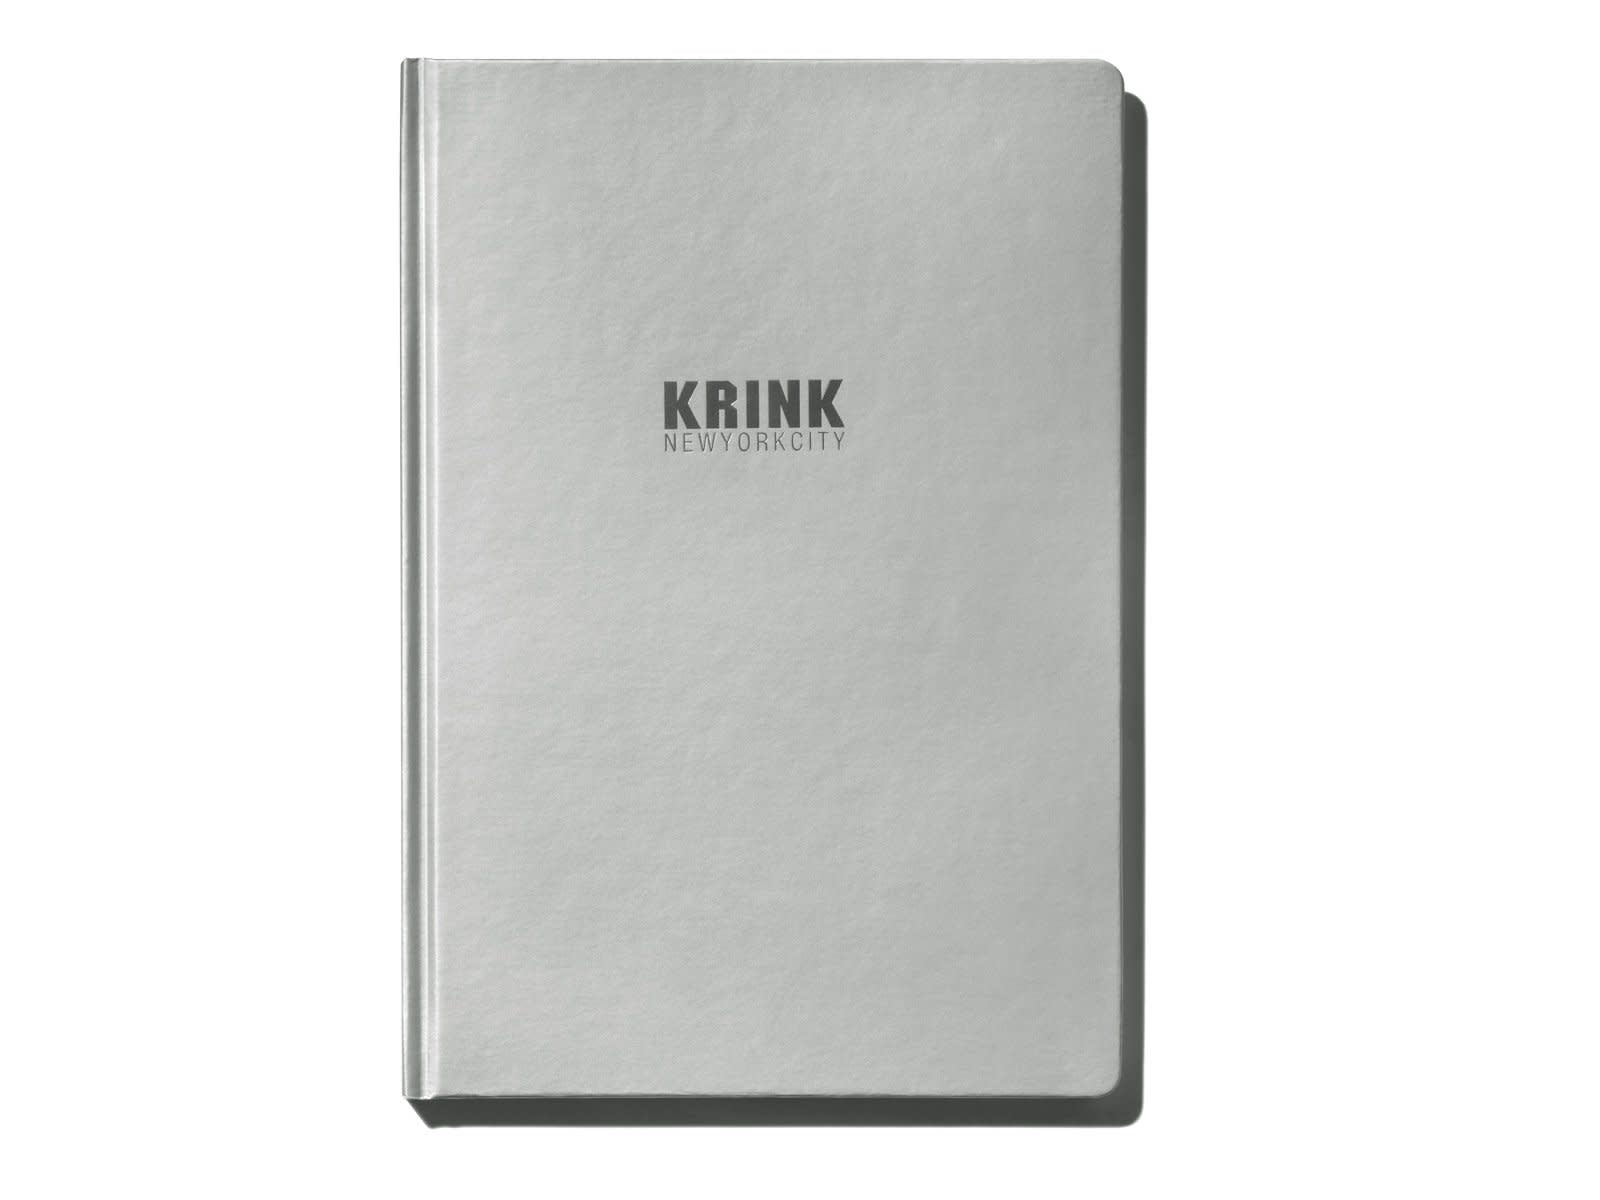 Krink Sketchbook - Wynwood Walls Shop